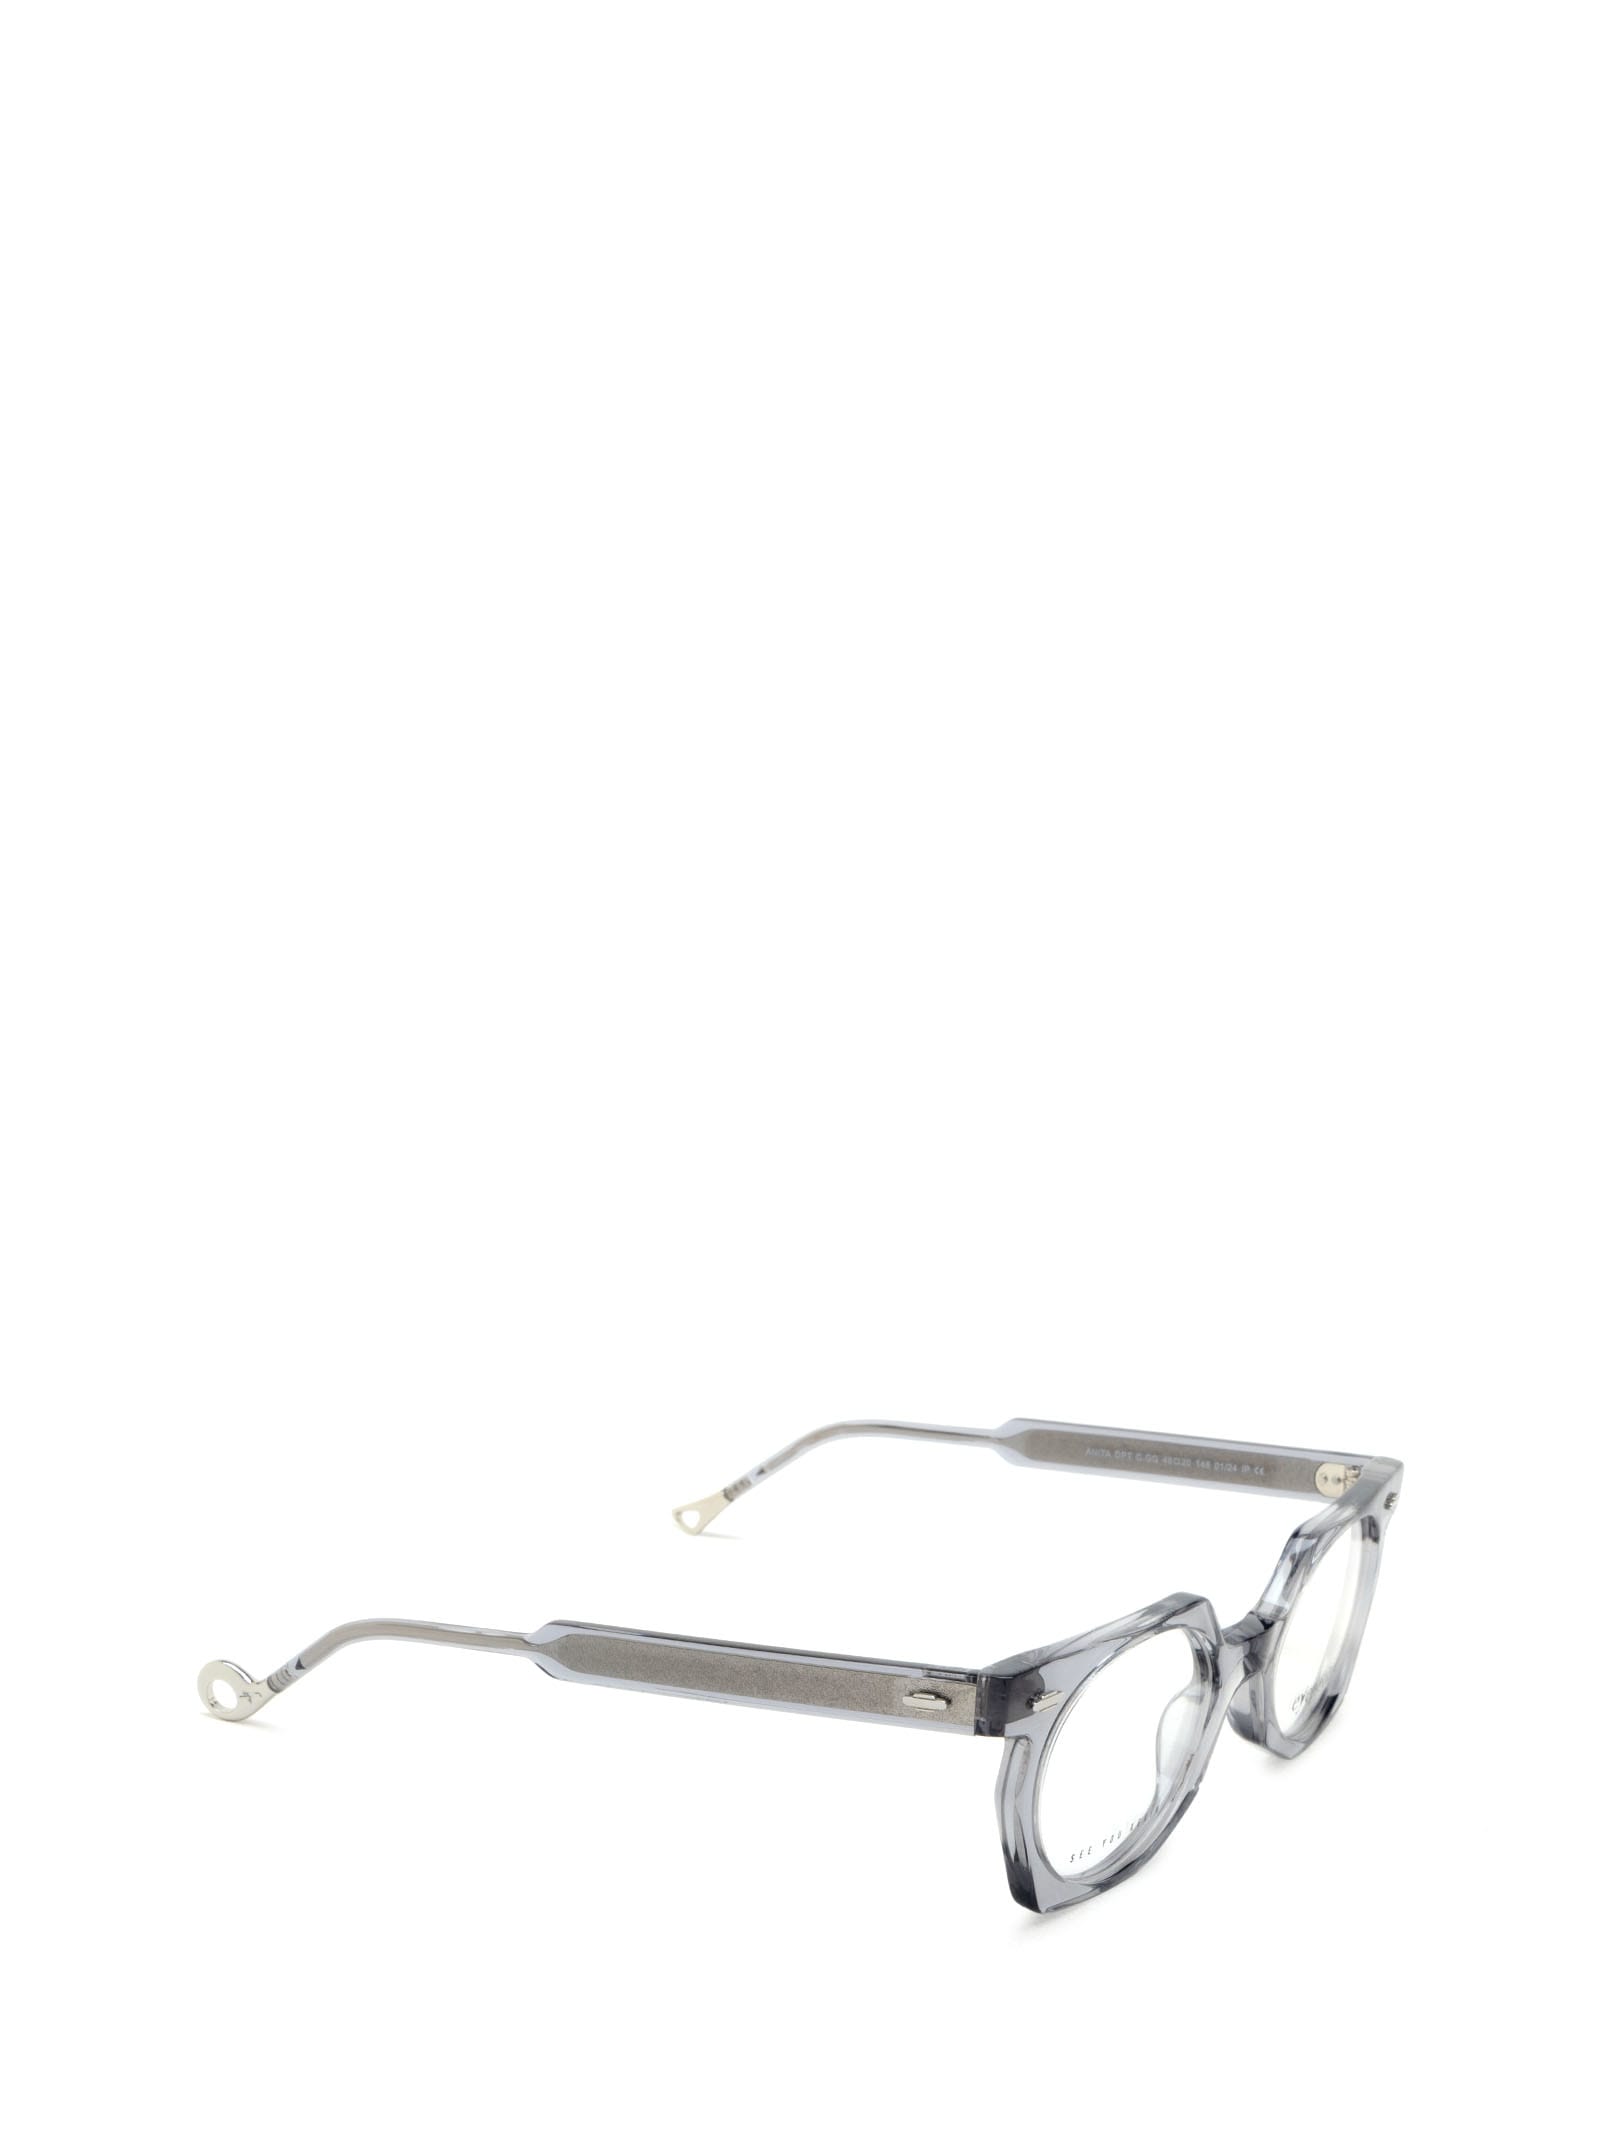 Shop Eyepetizer Anita Opt Grey Glasses